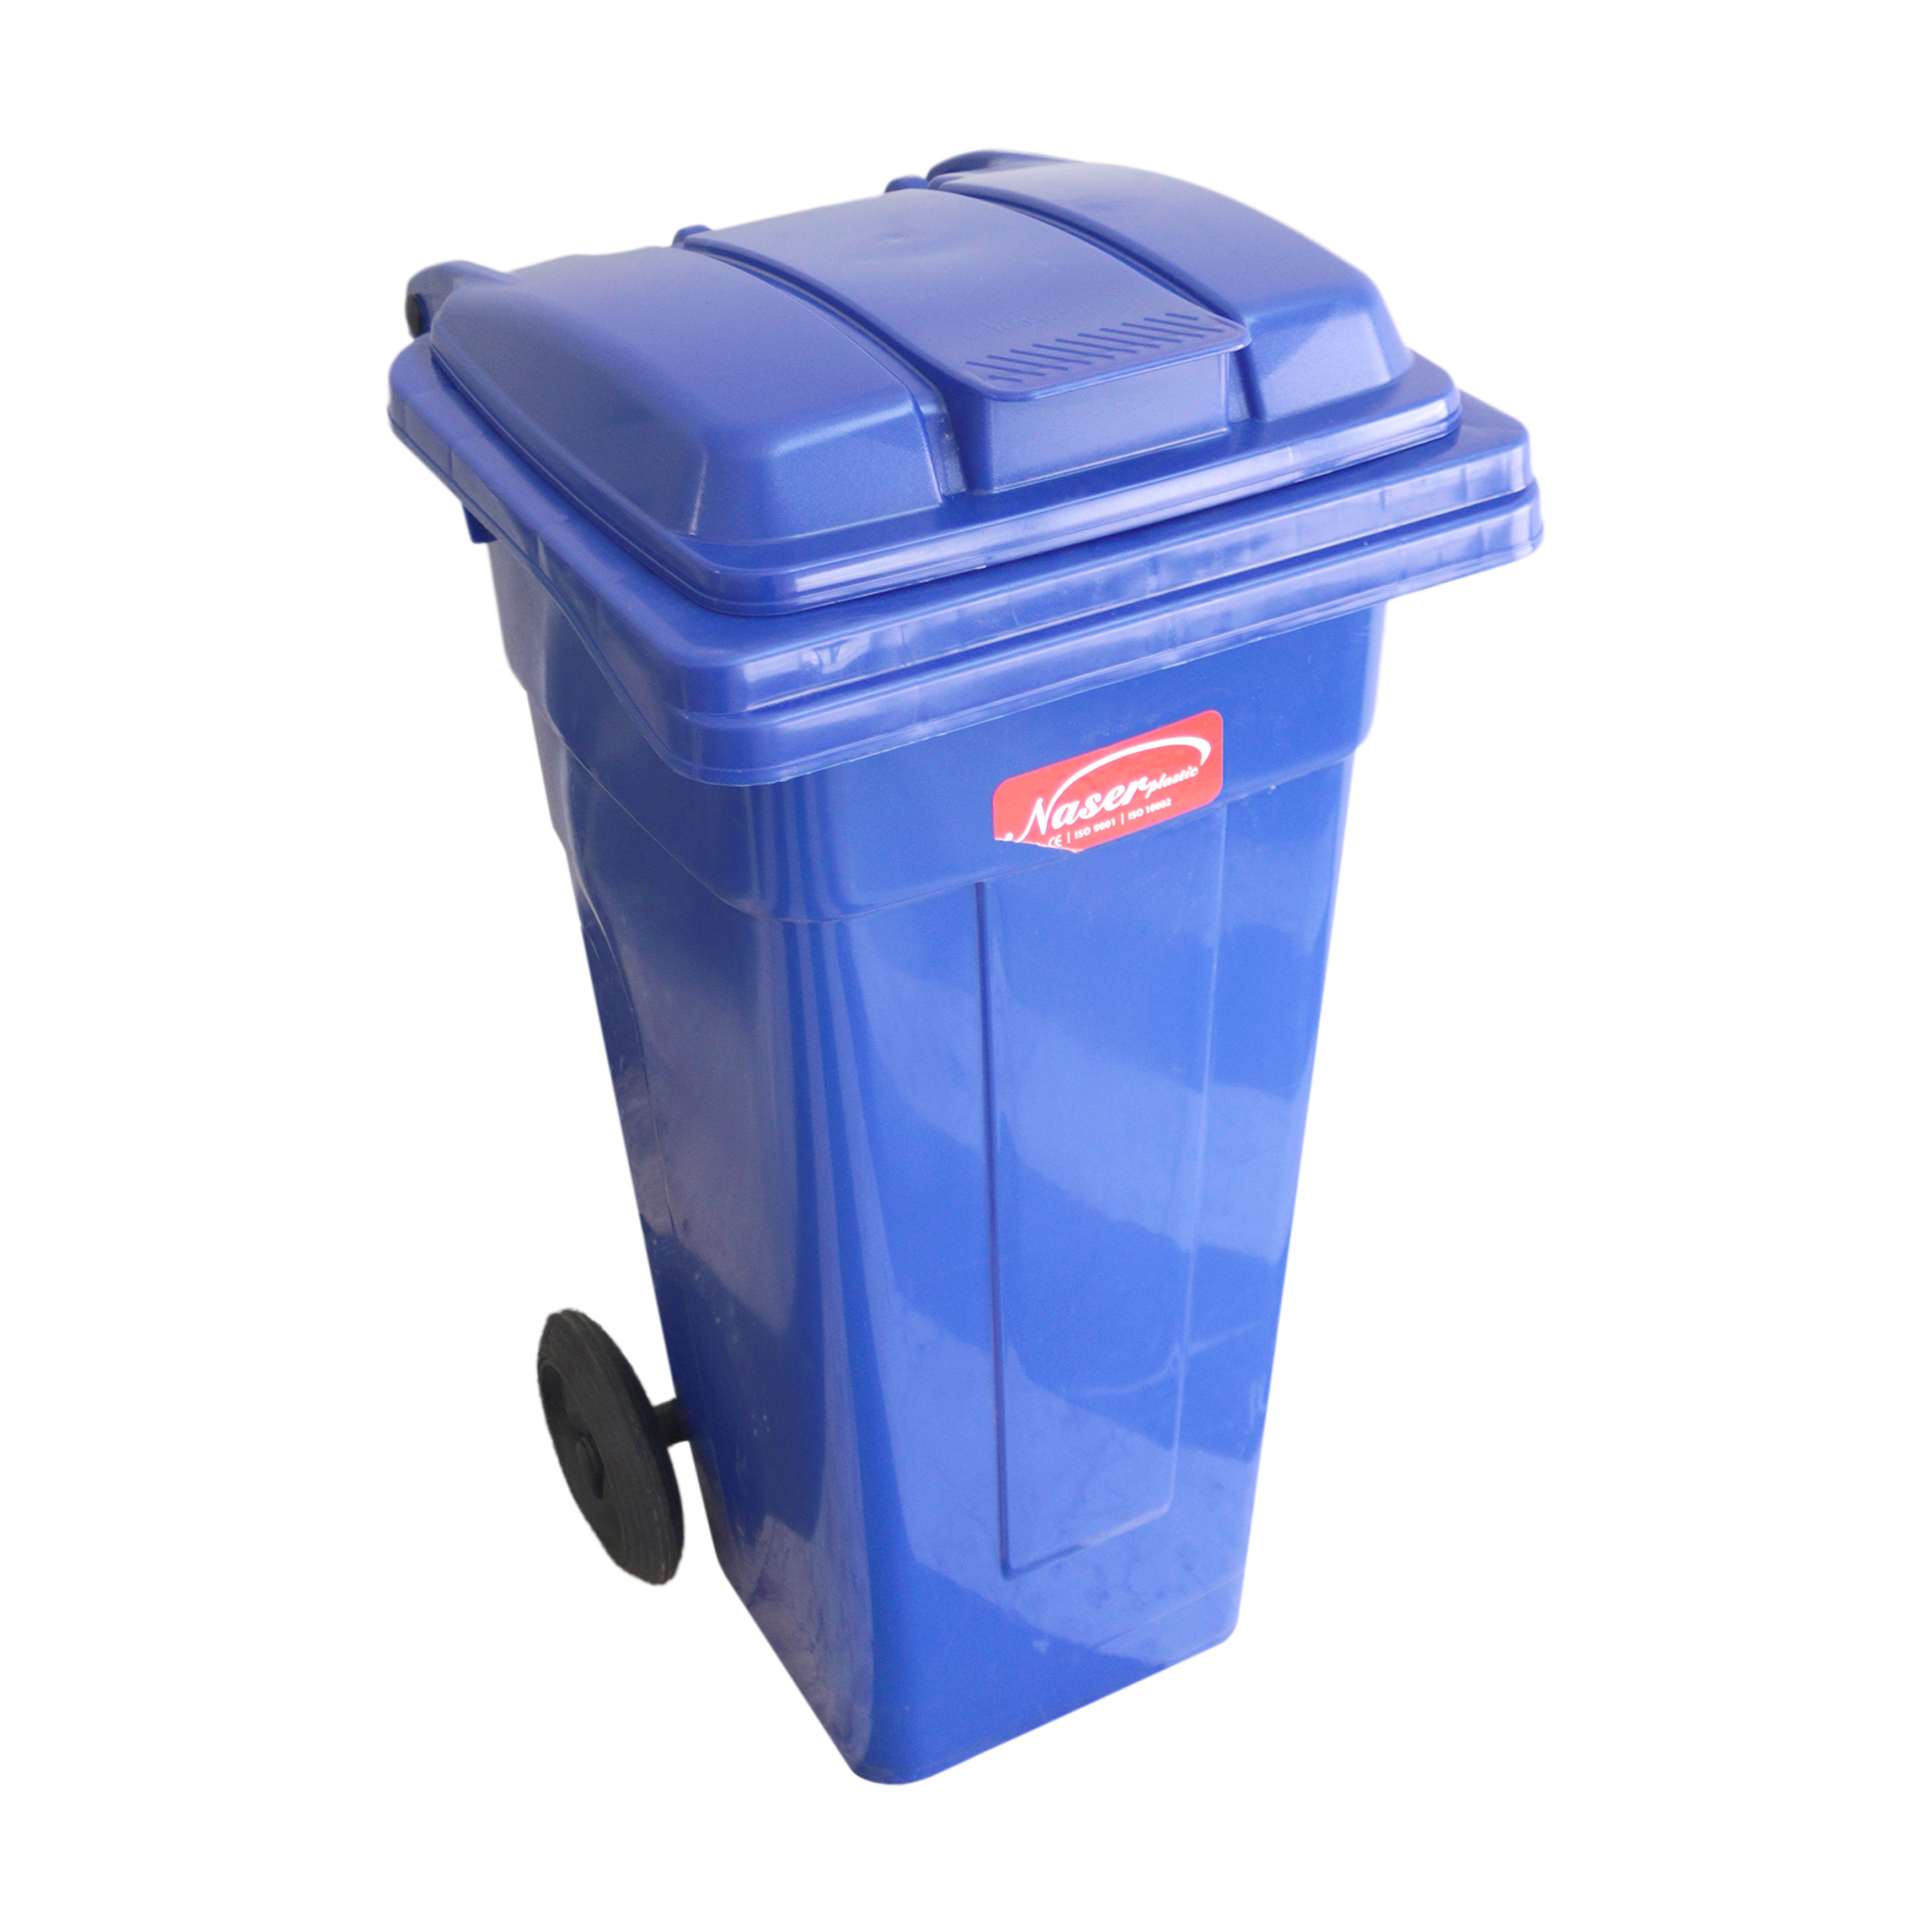 سطل زباله ناصر پلاستیک مدل YPAB-GHARKHDAR-5120